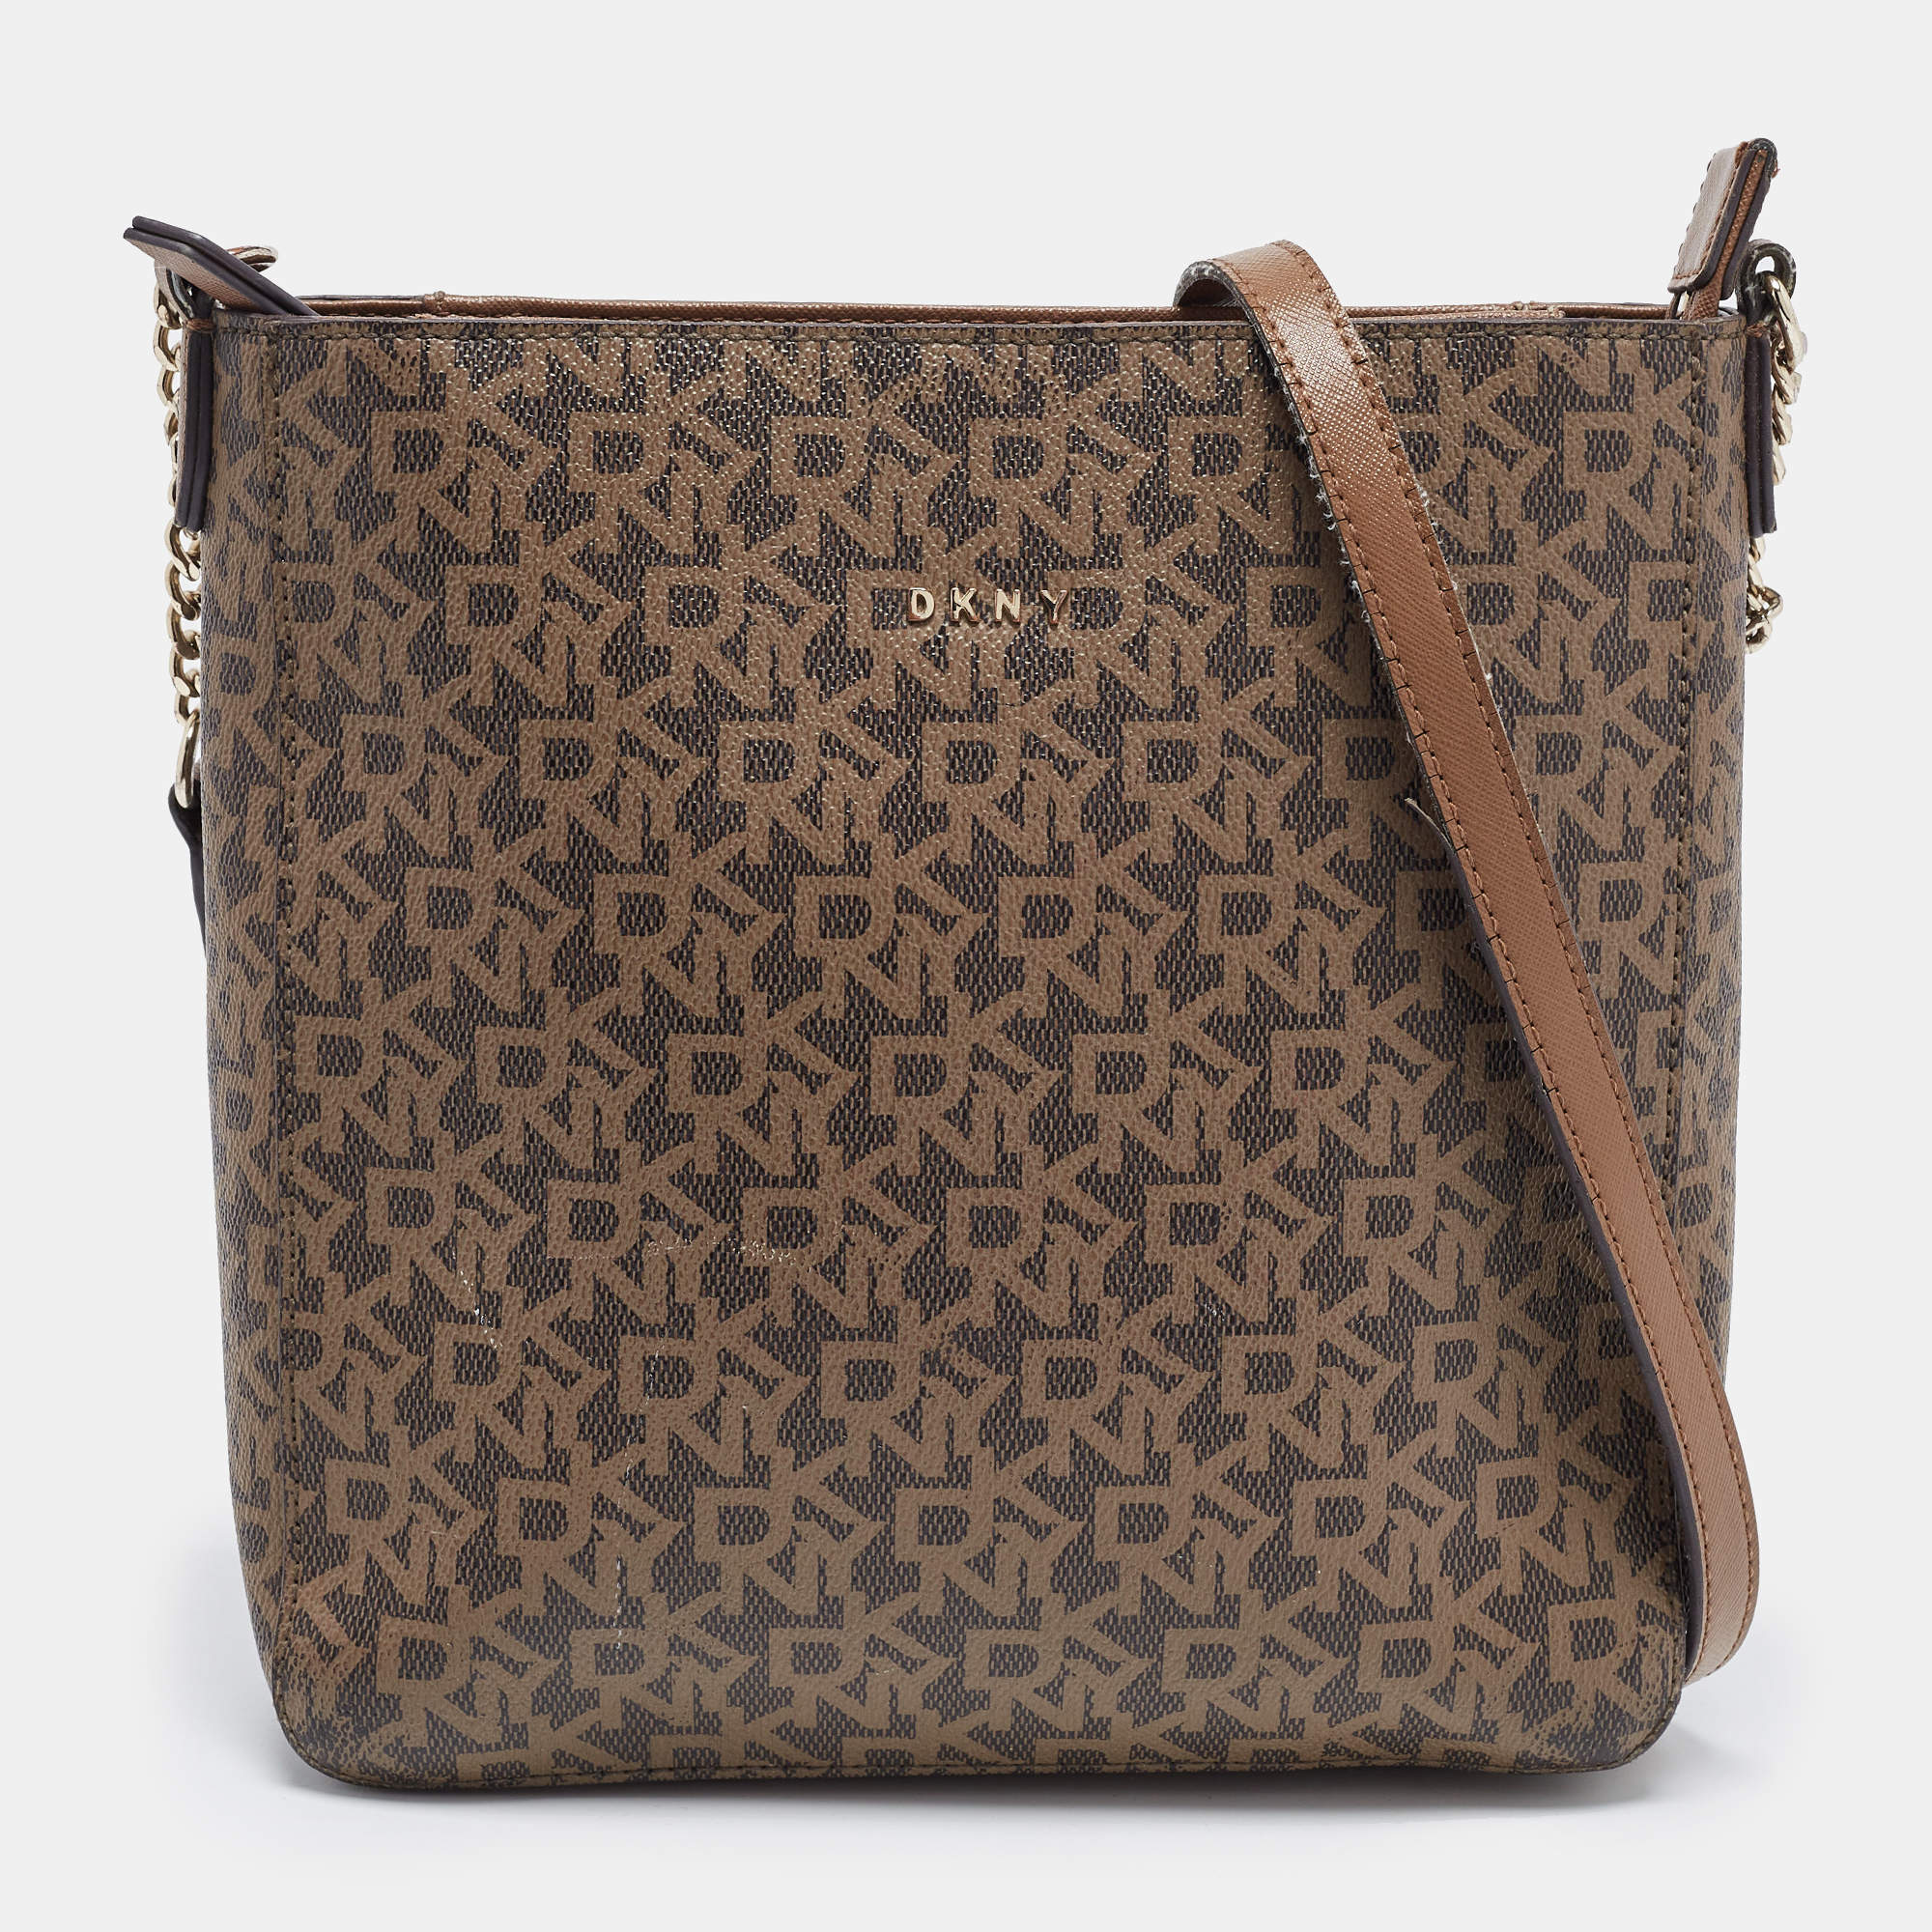 DKNY Brown Leather Crossbody Handbag Purse 